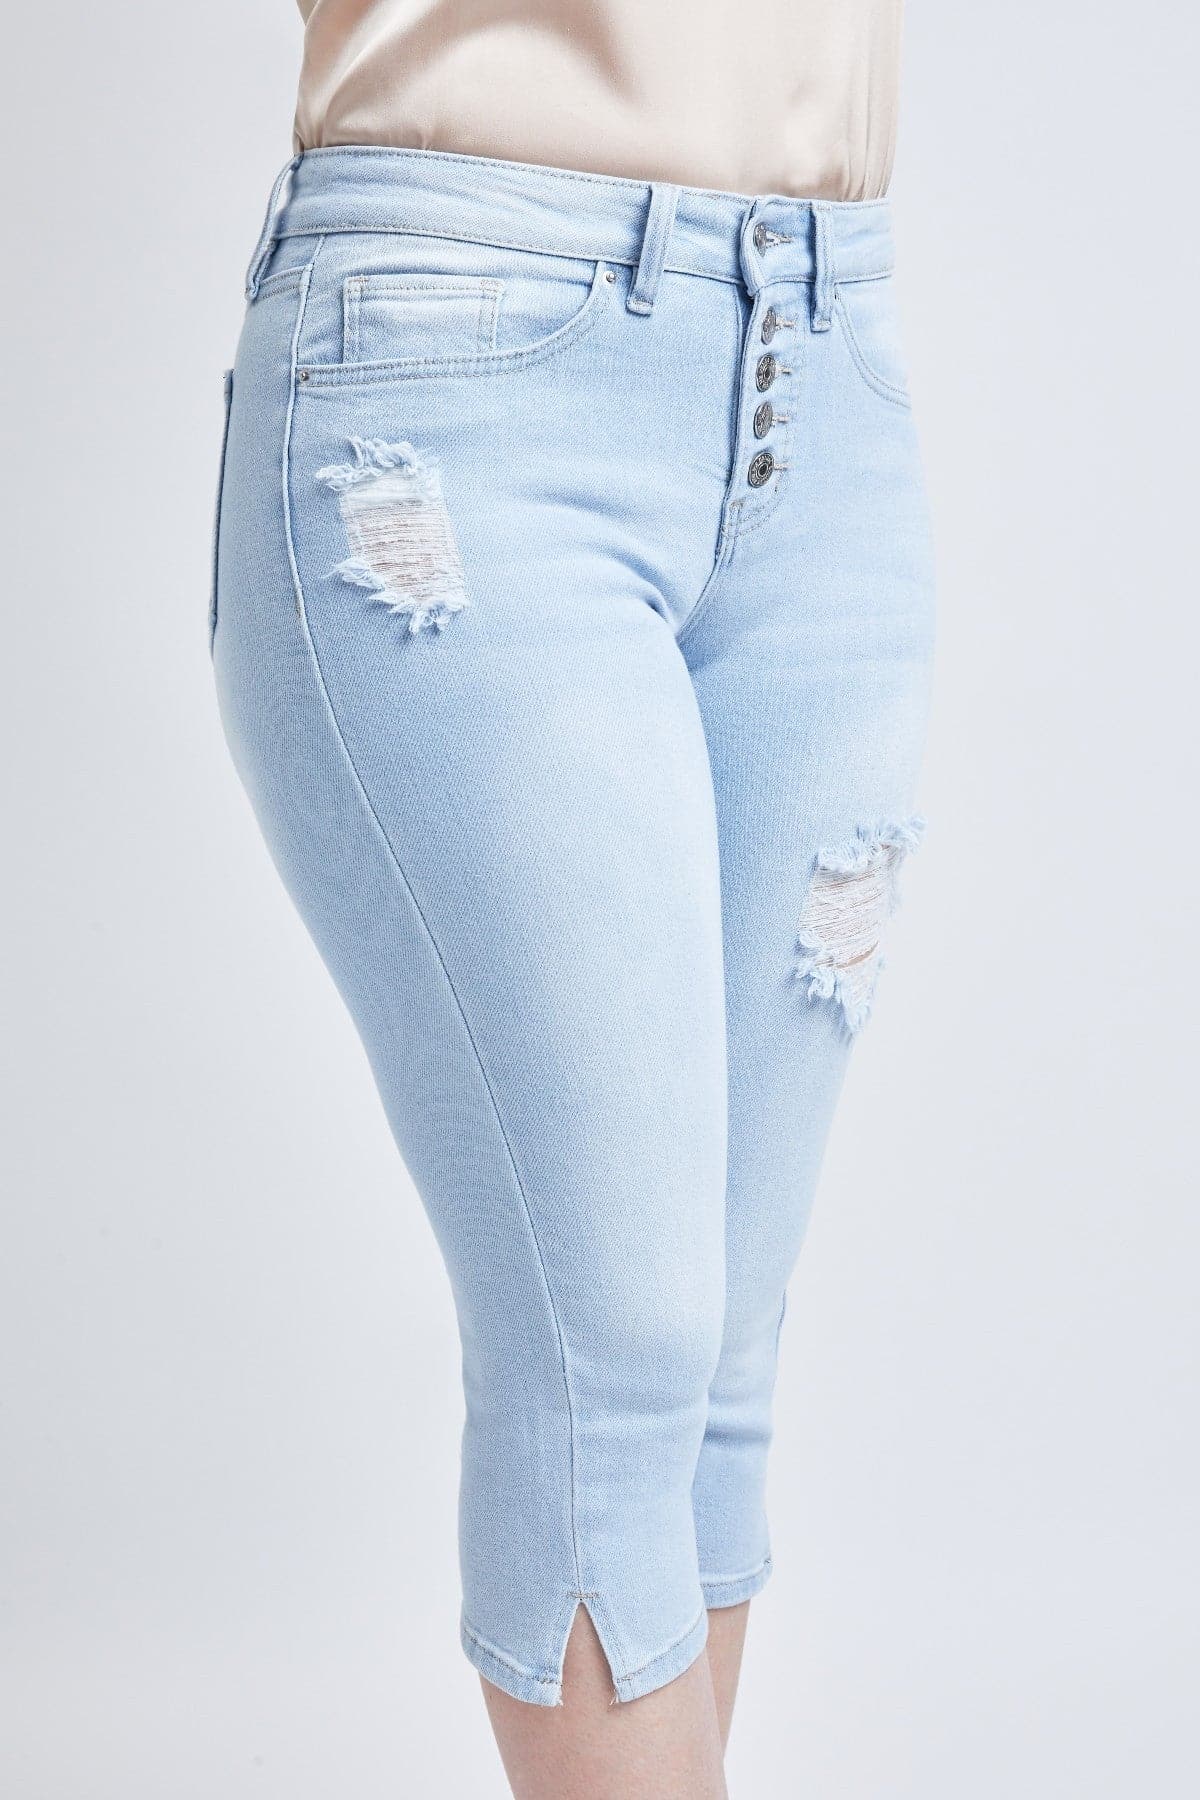 Women's Vintage High Rise Capri Jeans